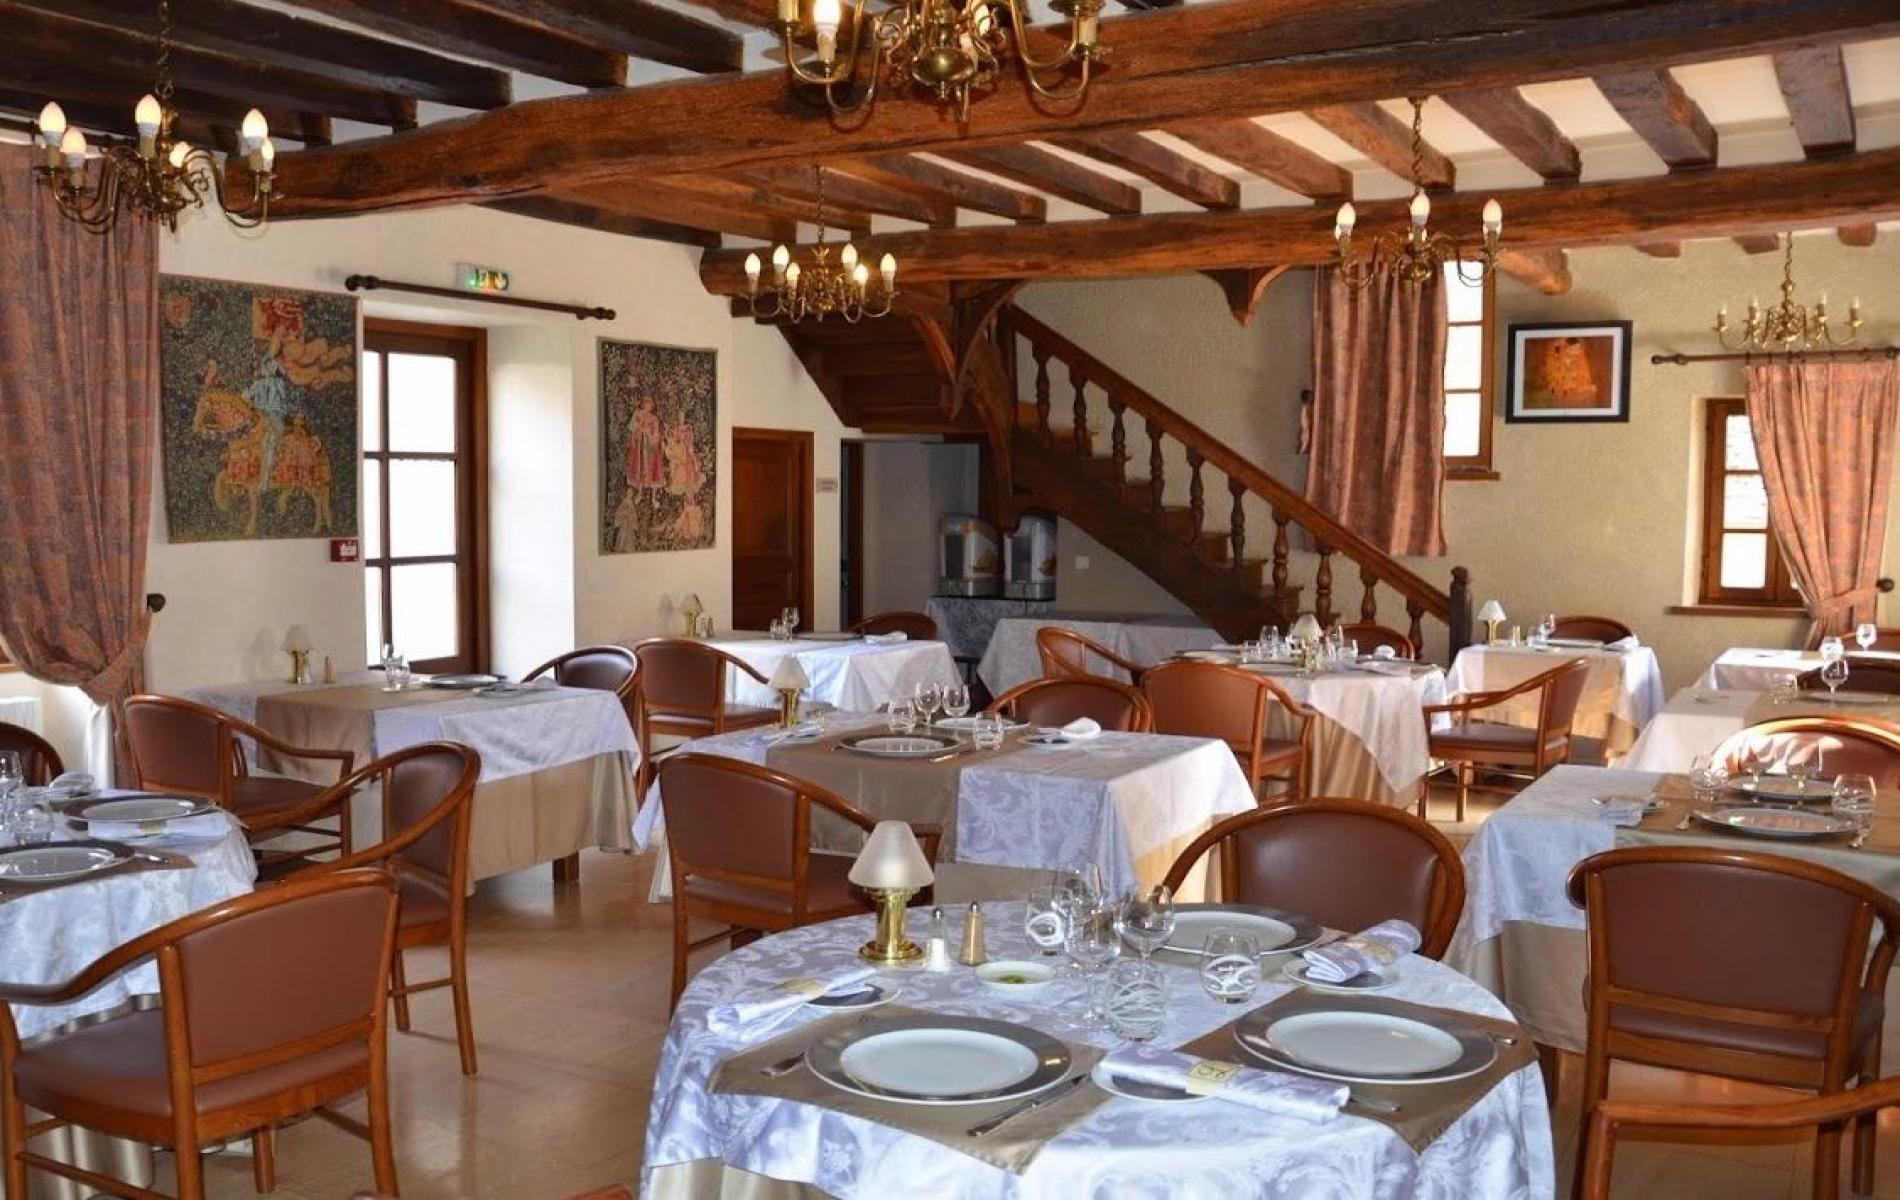 The ***hotel restaurant, Le Relais Saint-Vincent welcomes tourism groups and your reception  guests.